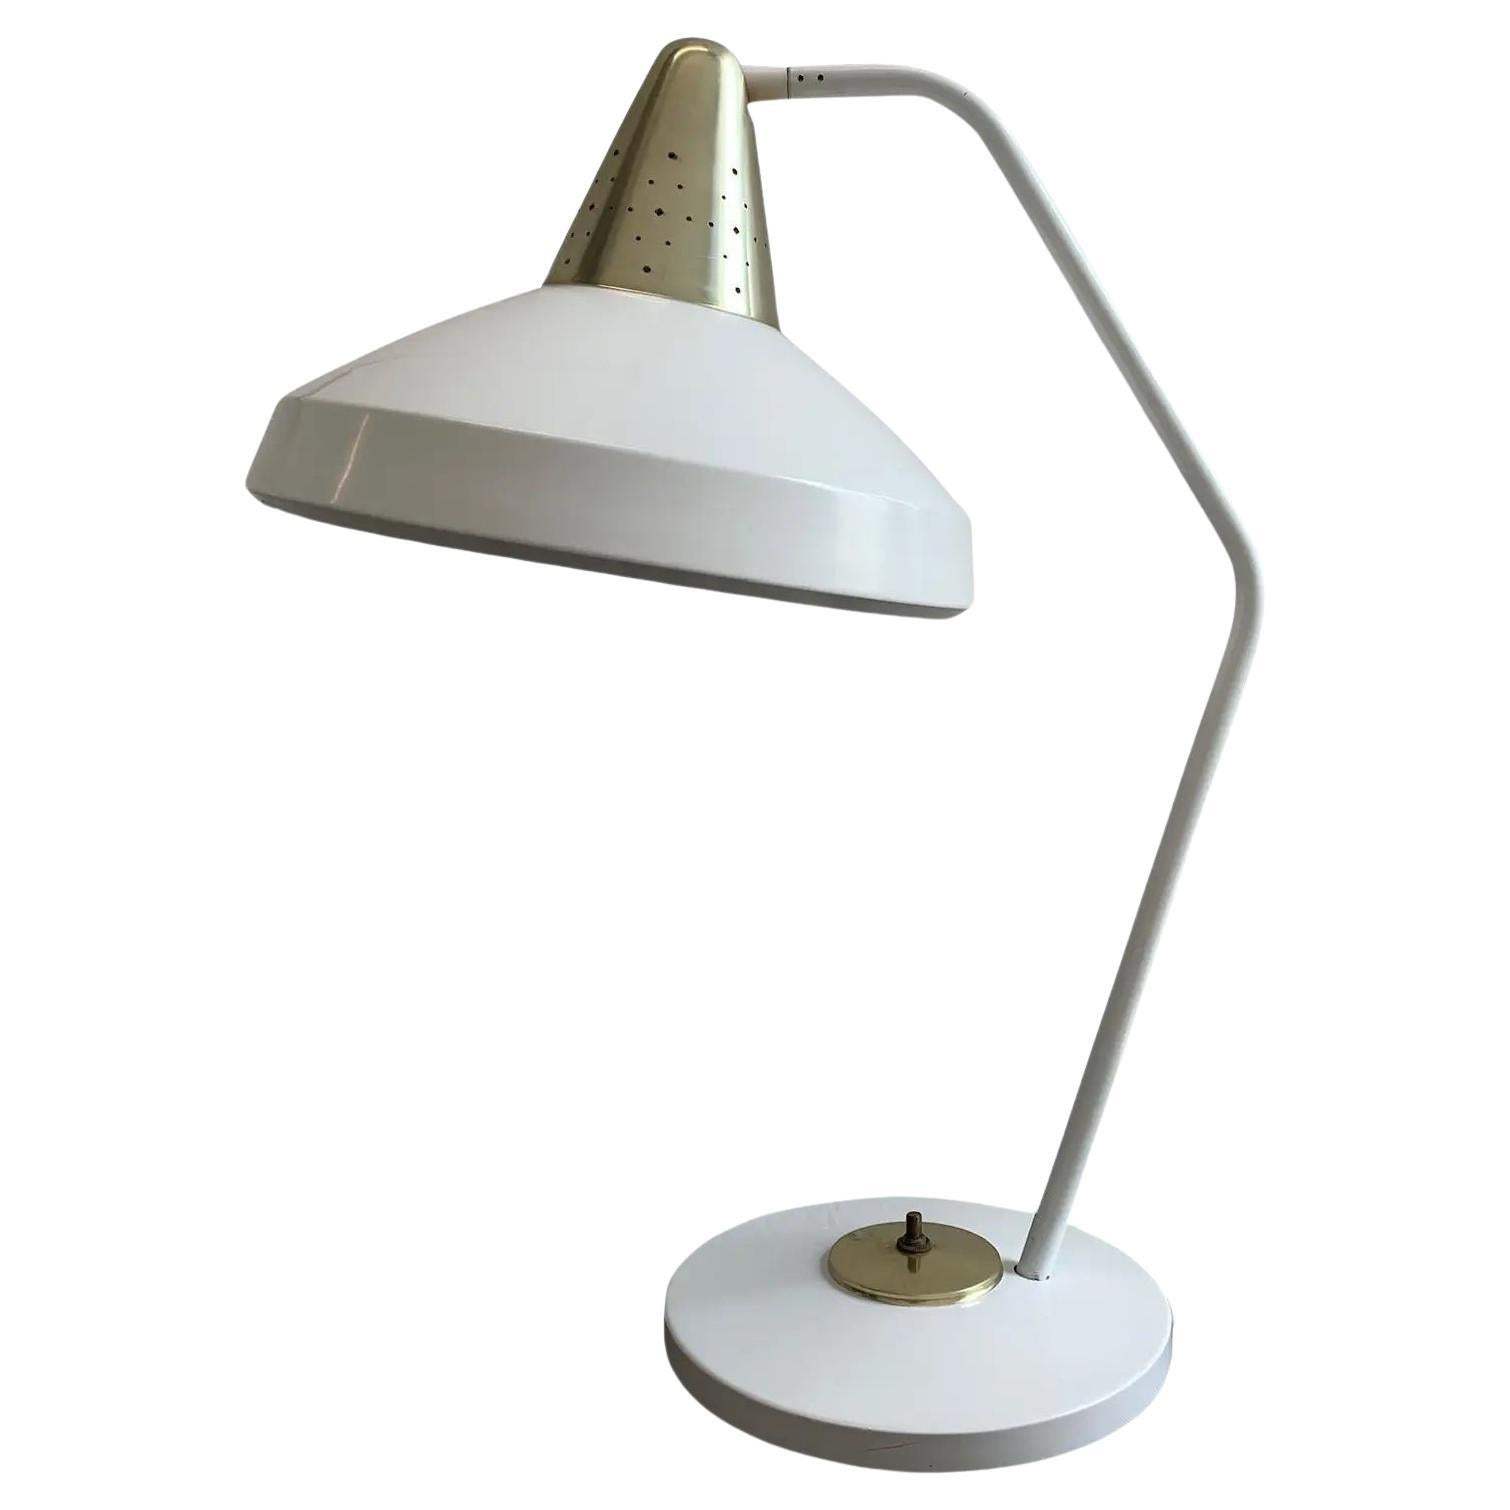 Vintage White Metal Desk Lamp by Swivelier, Attributed to Bill Scarlett, 1960s For Sale